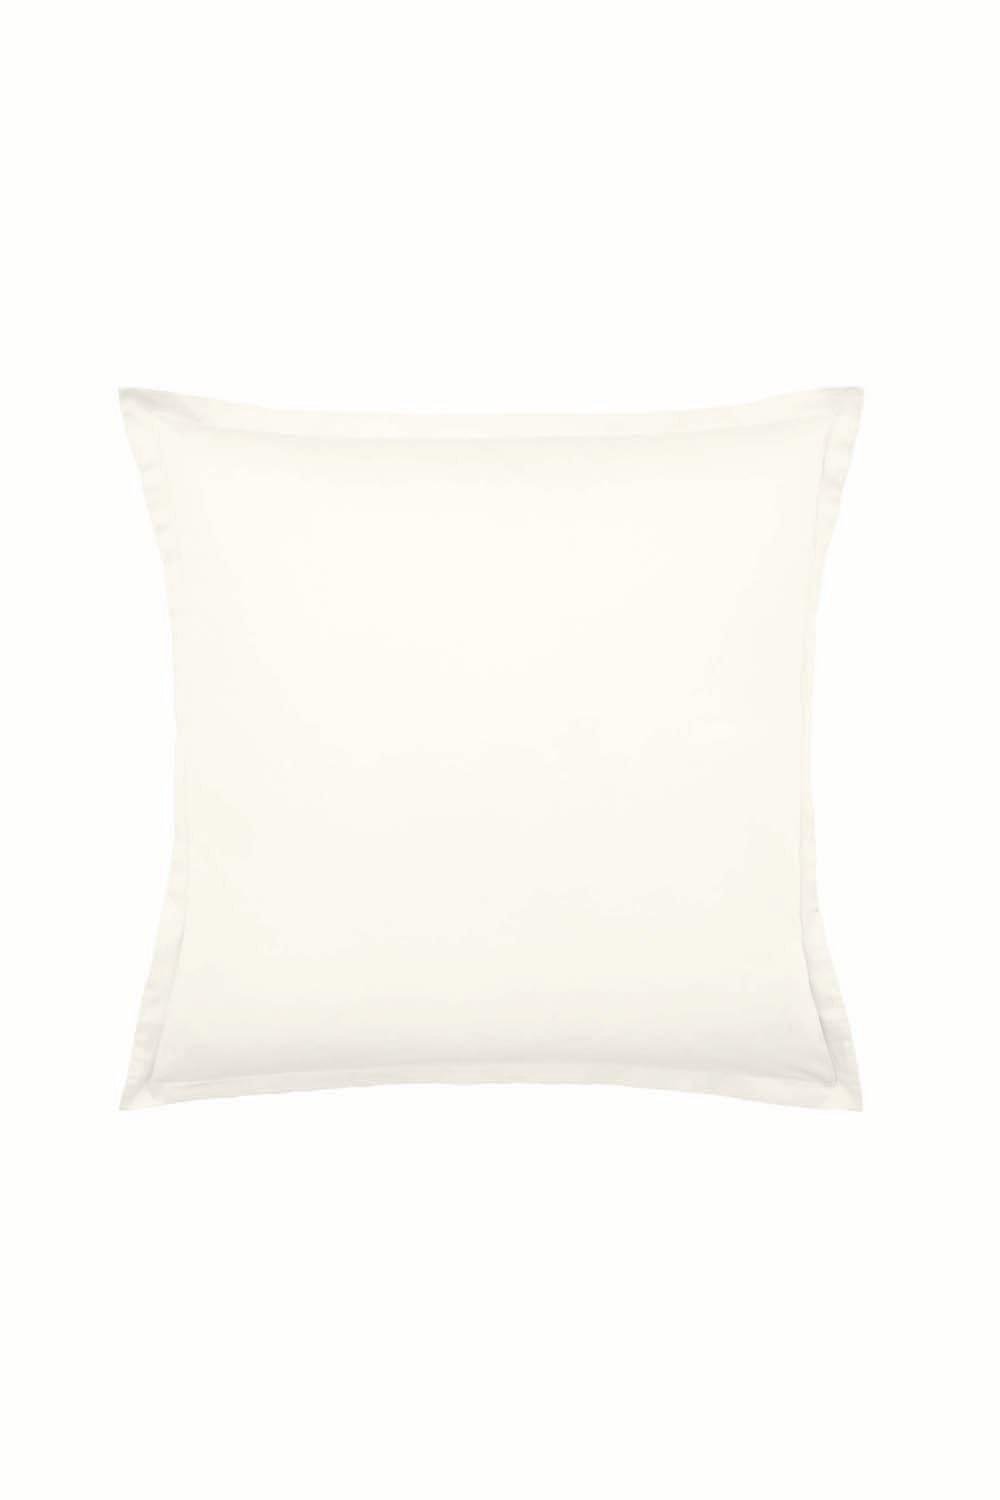 'Murmur 1000TC Plain Dye' Egyptian Cotton Square Pillowcase